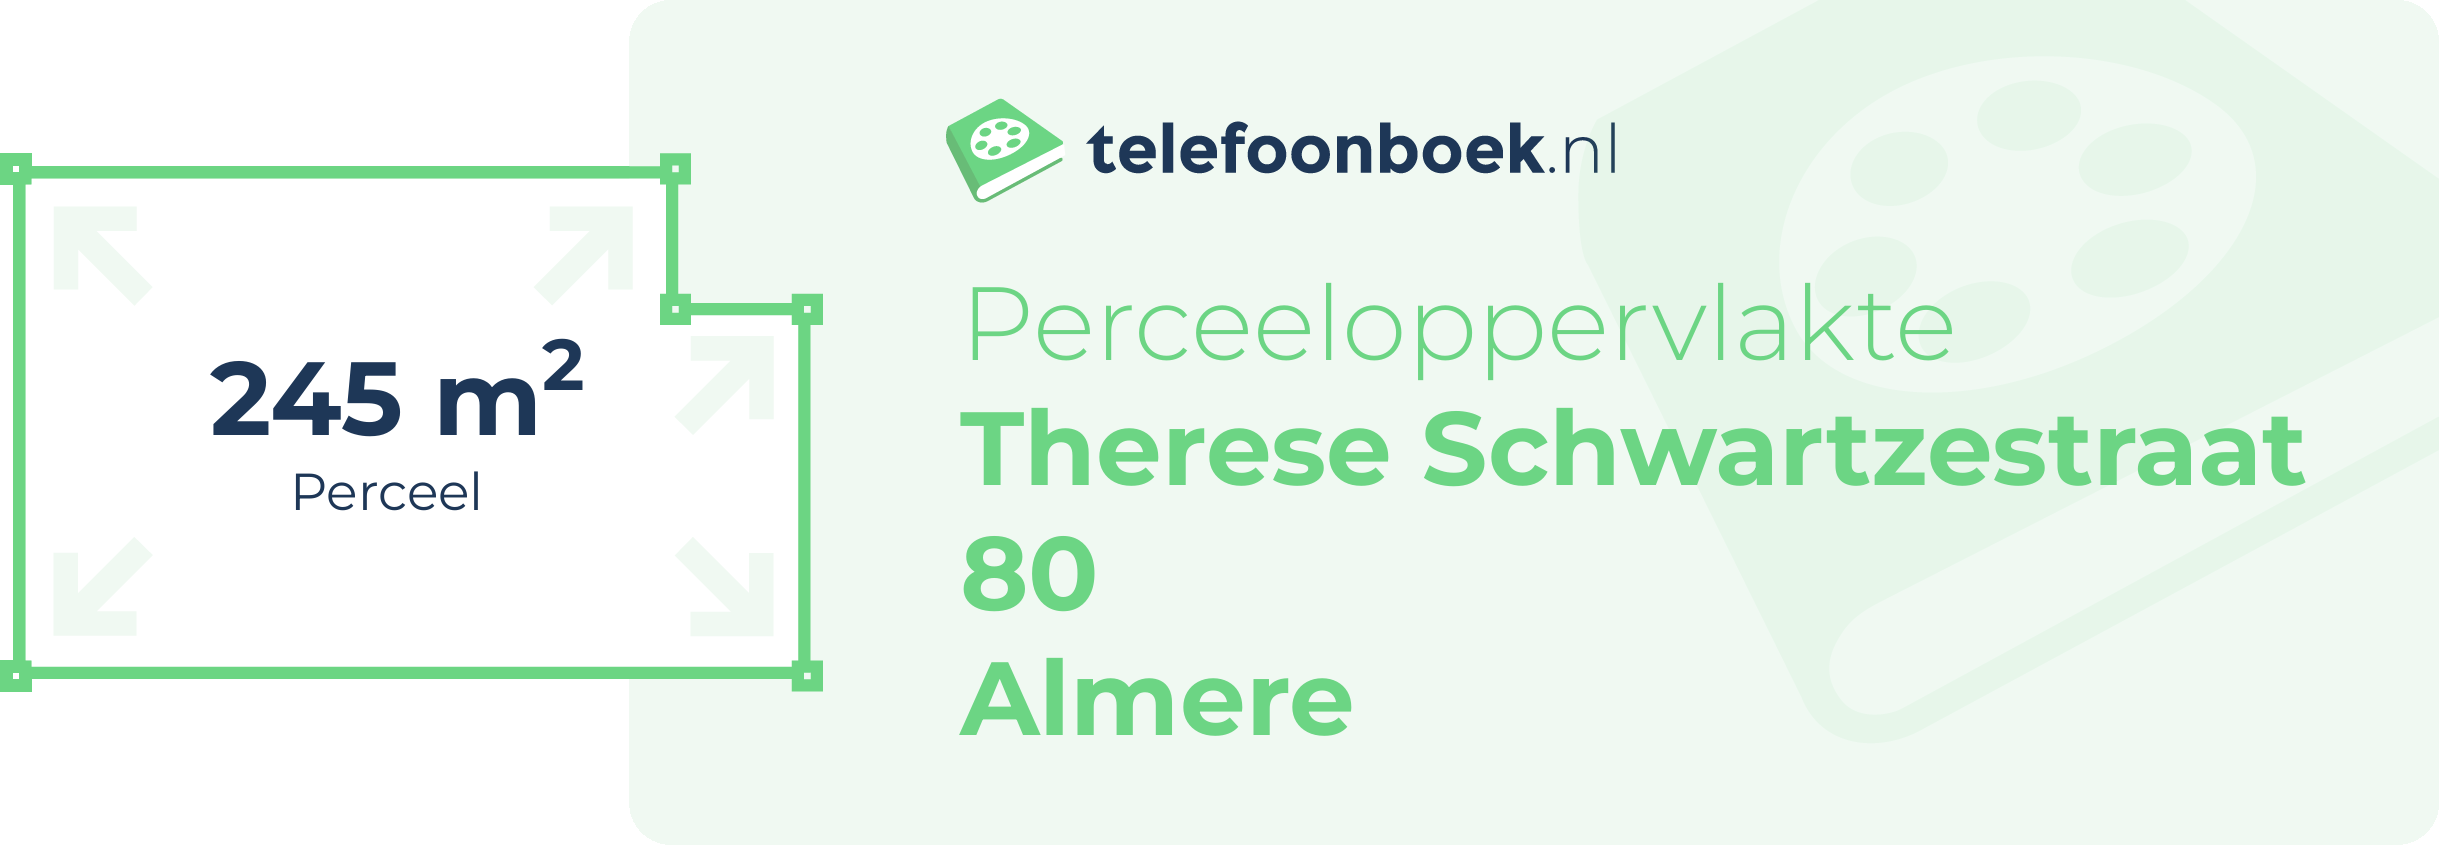 Perceeloppervlakte Therese Schwartzestraat 80 Almere